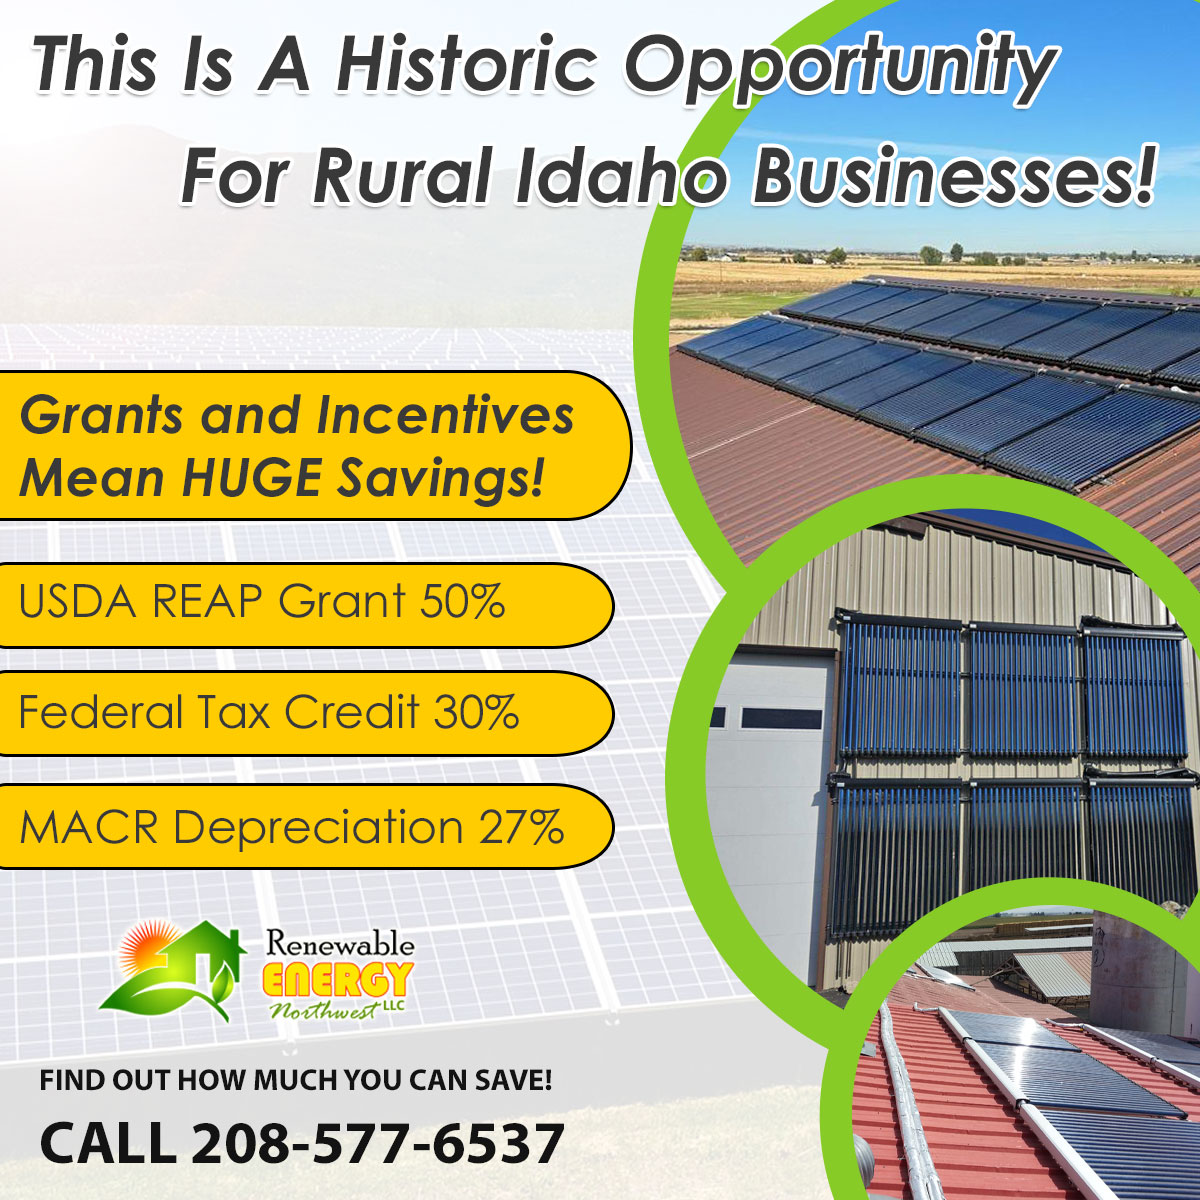 idaho rural business grant